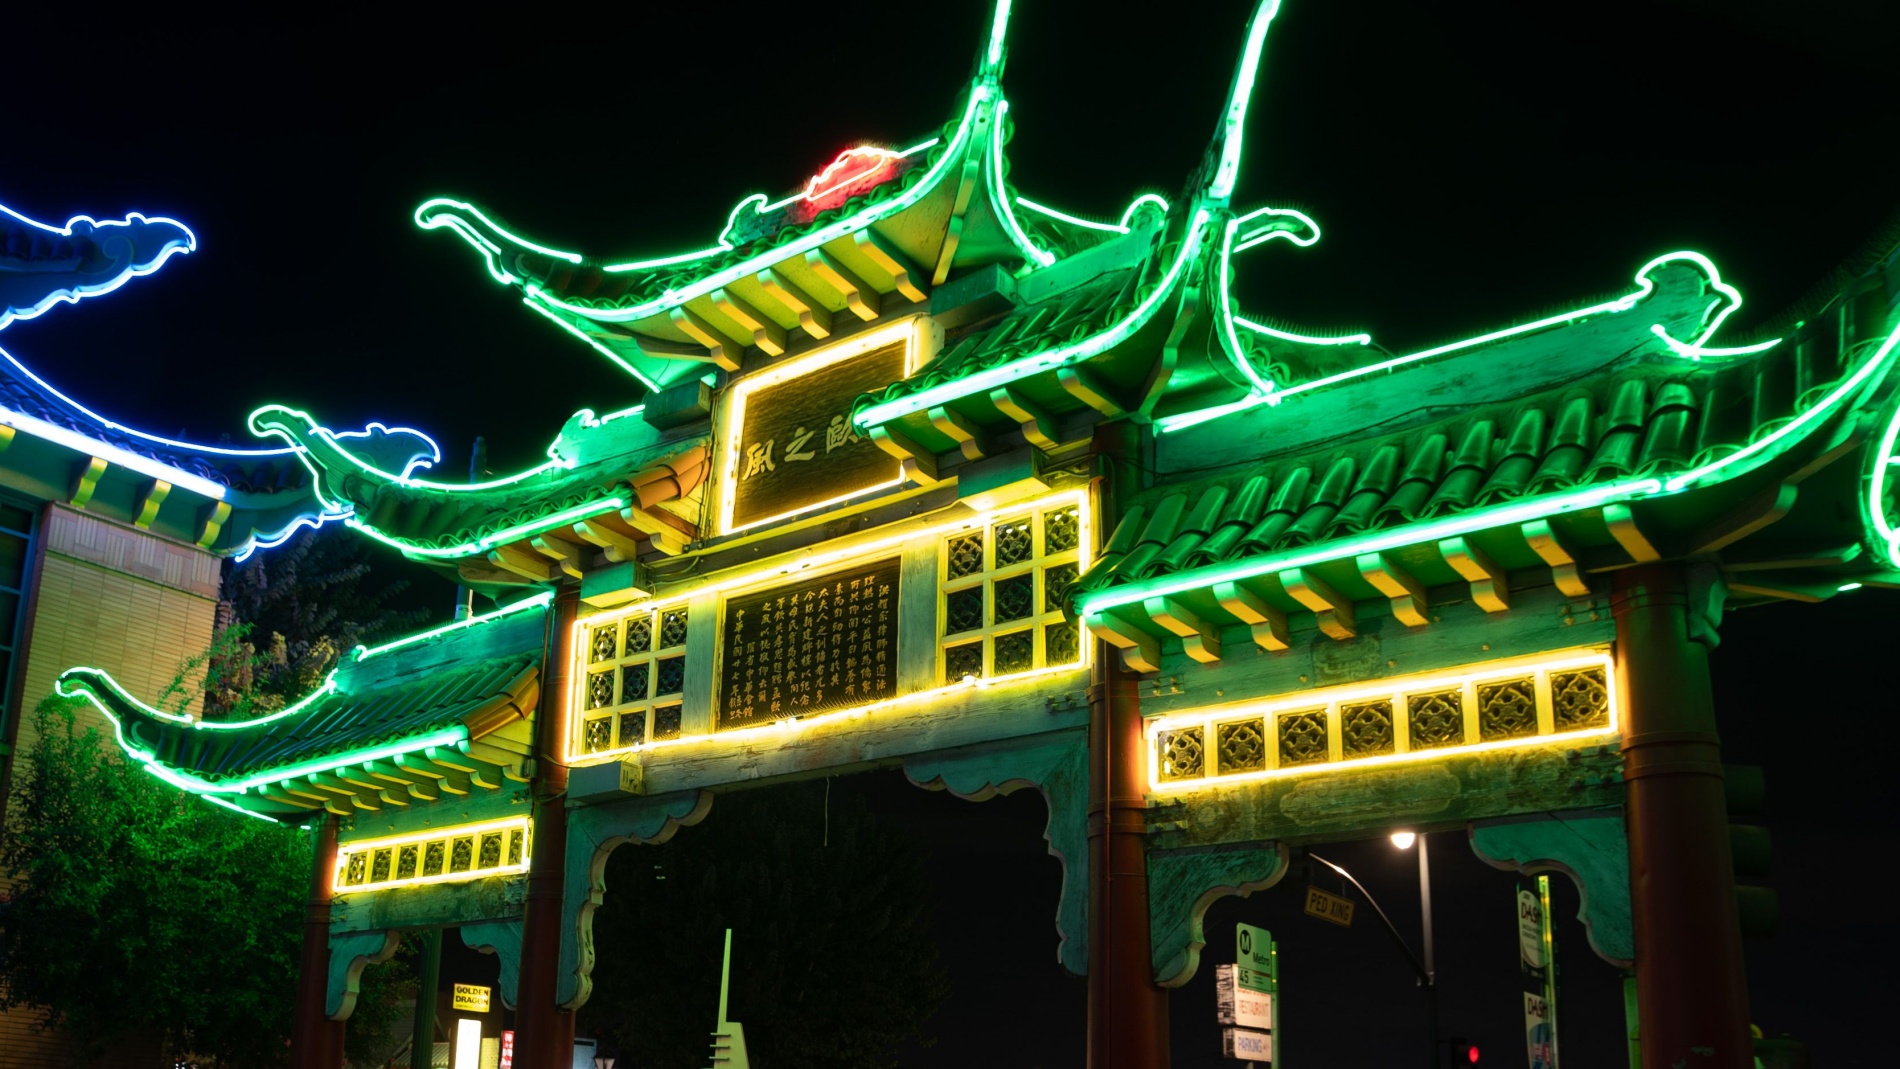 Chinatown Summer Nights returns with food trucks, film, neon, and 